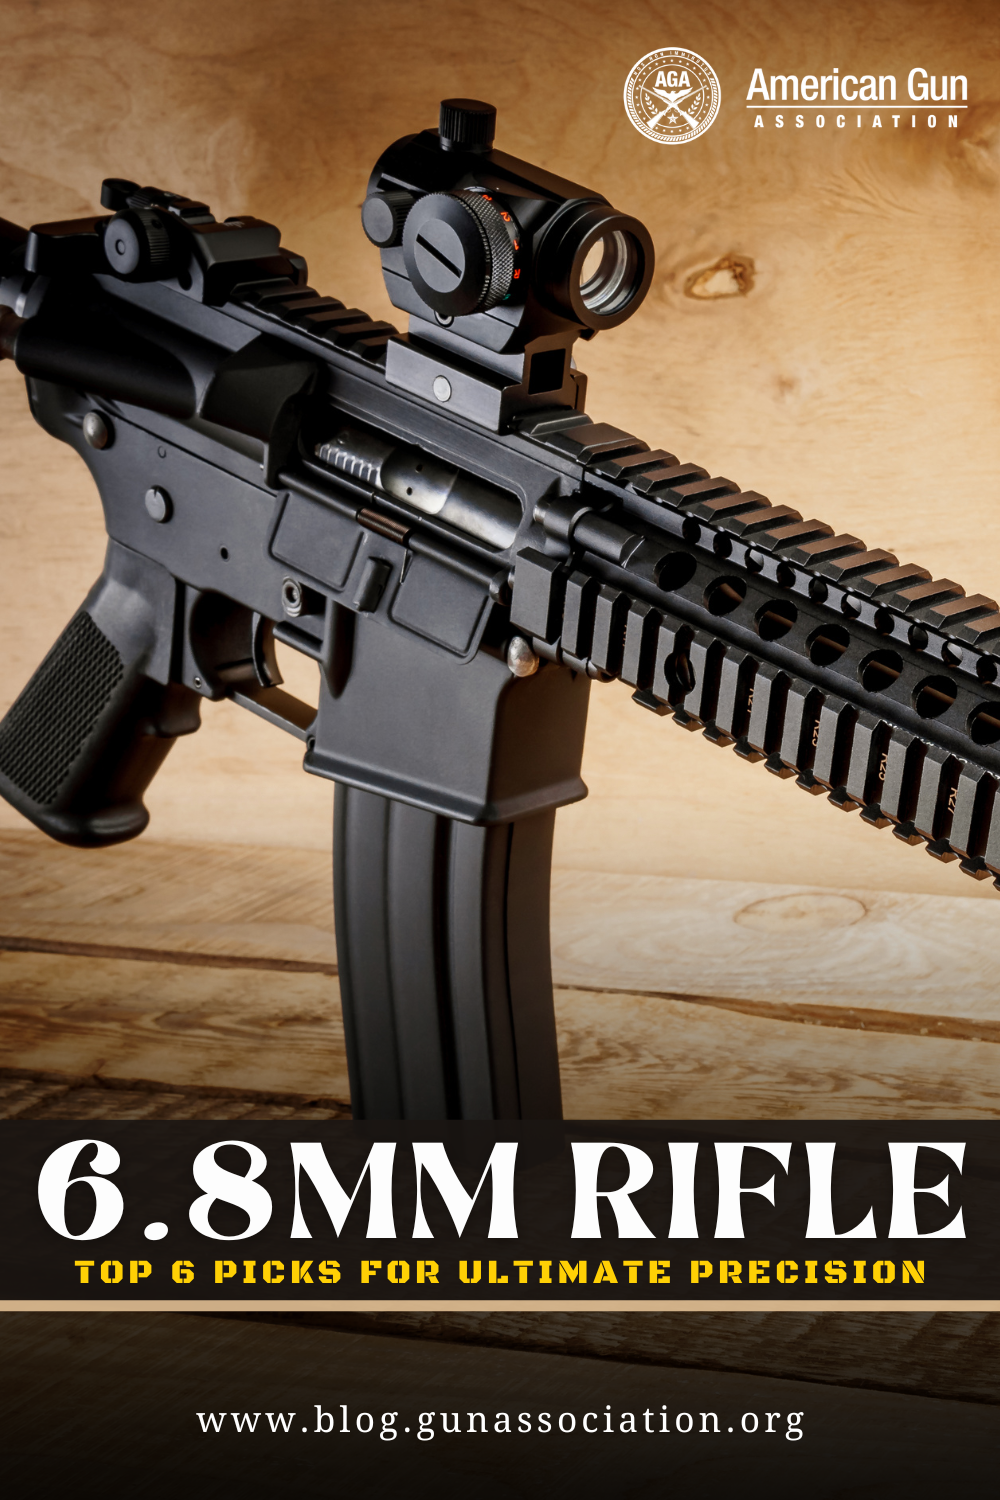 6.8mm rifle